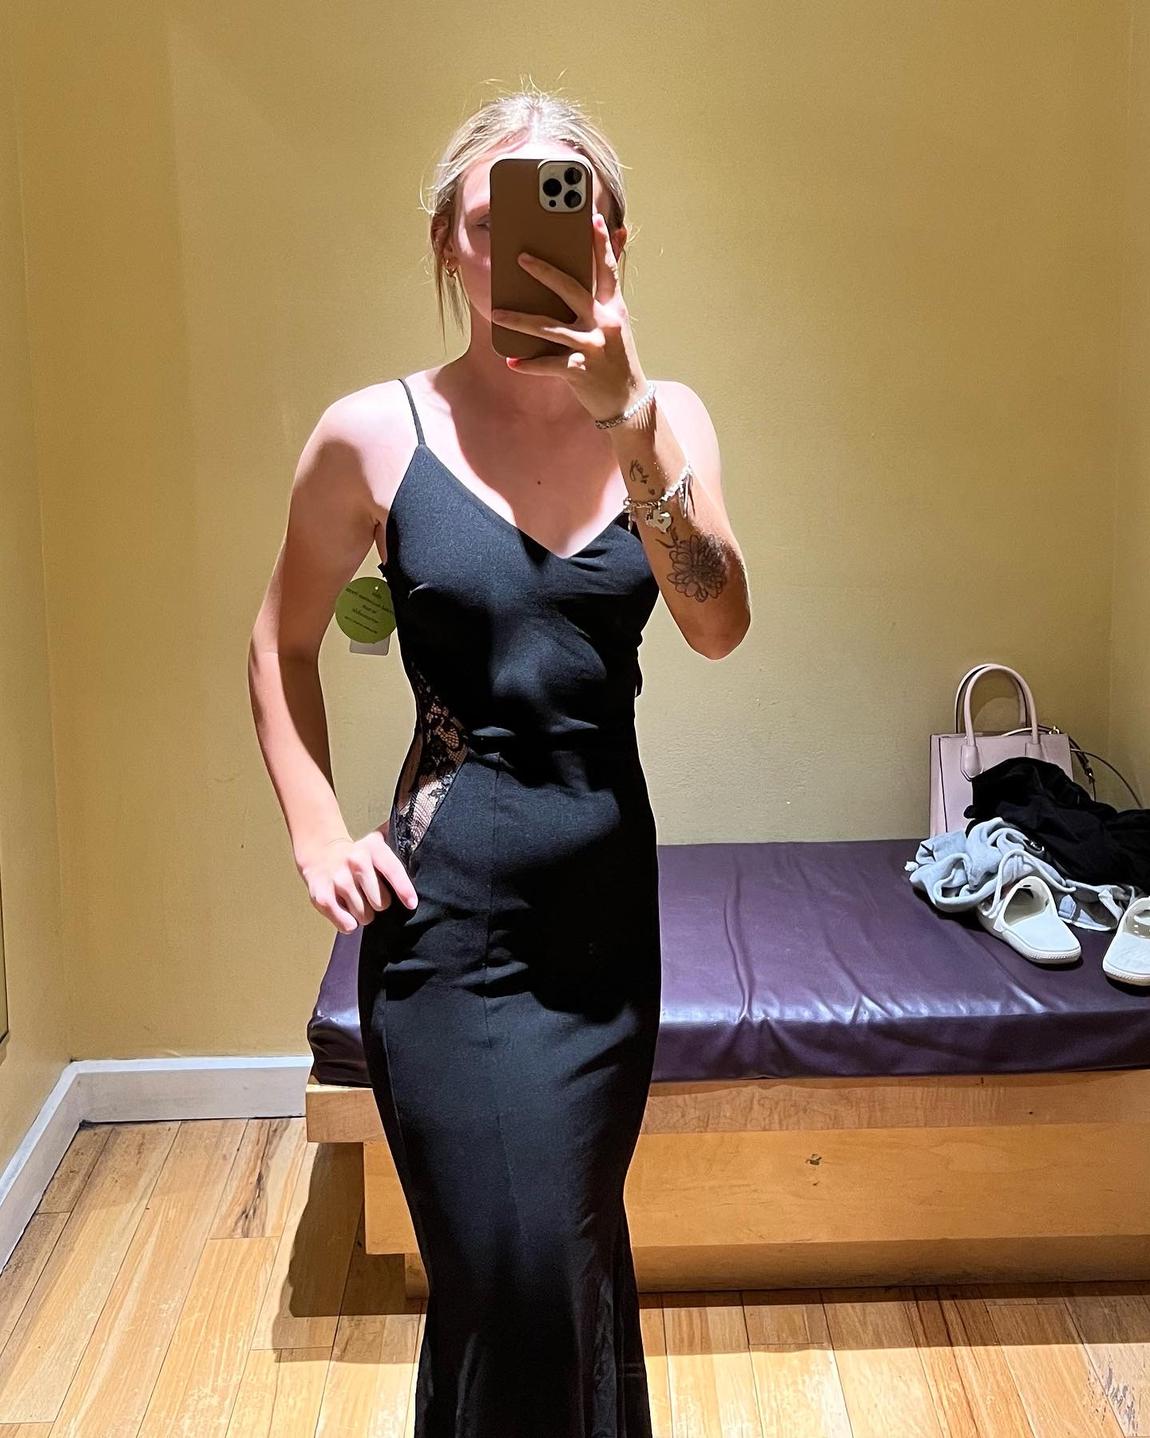 Size 0 Black Mermaid Dress on Queenly